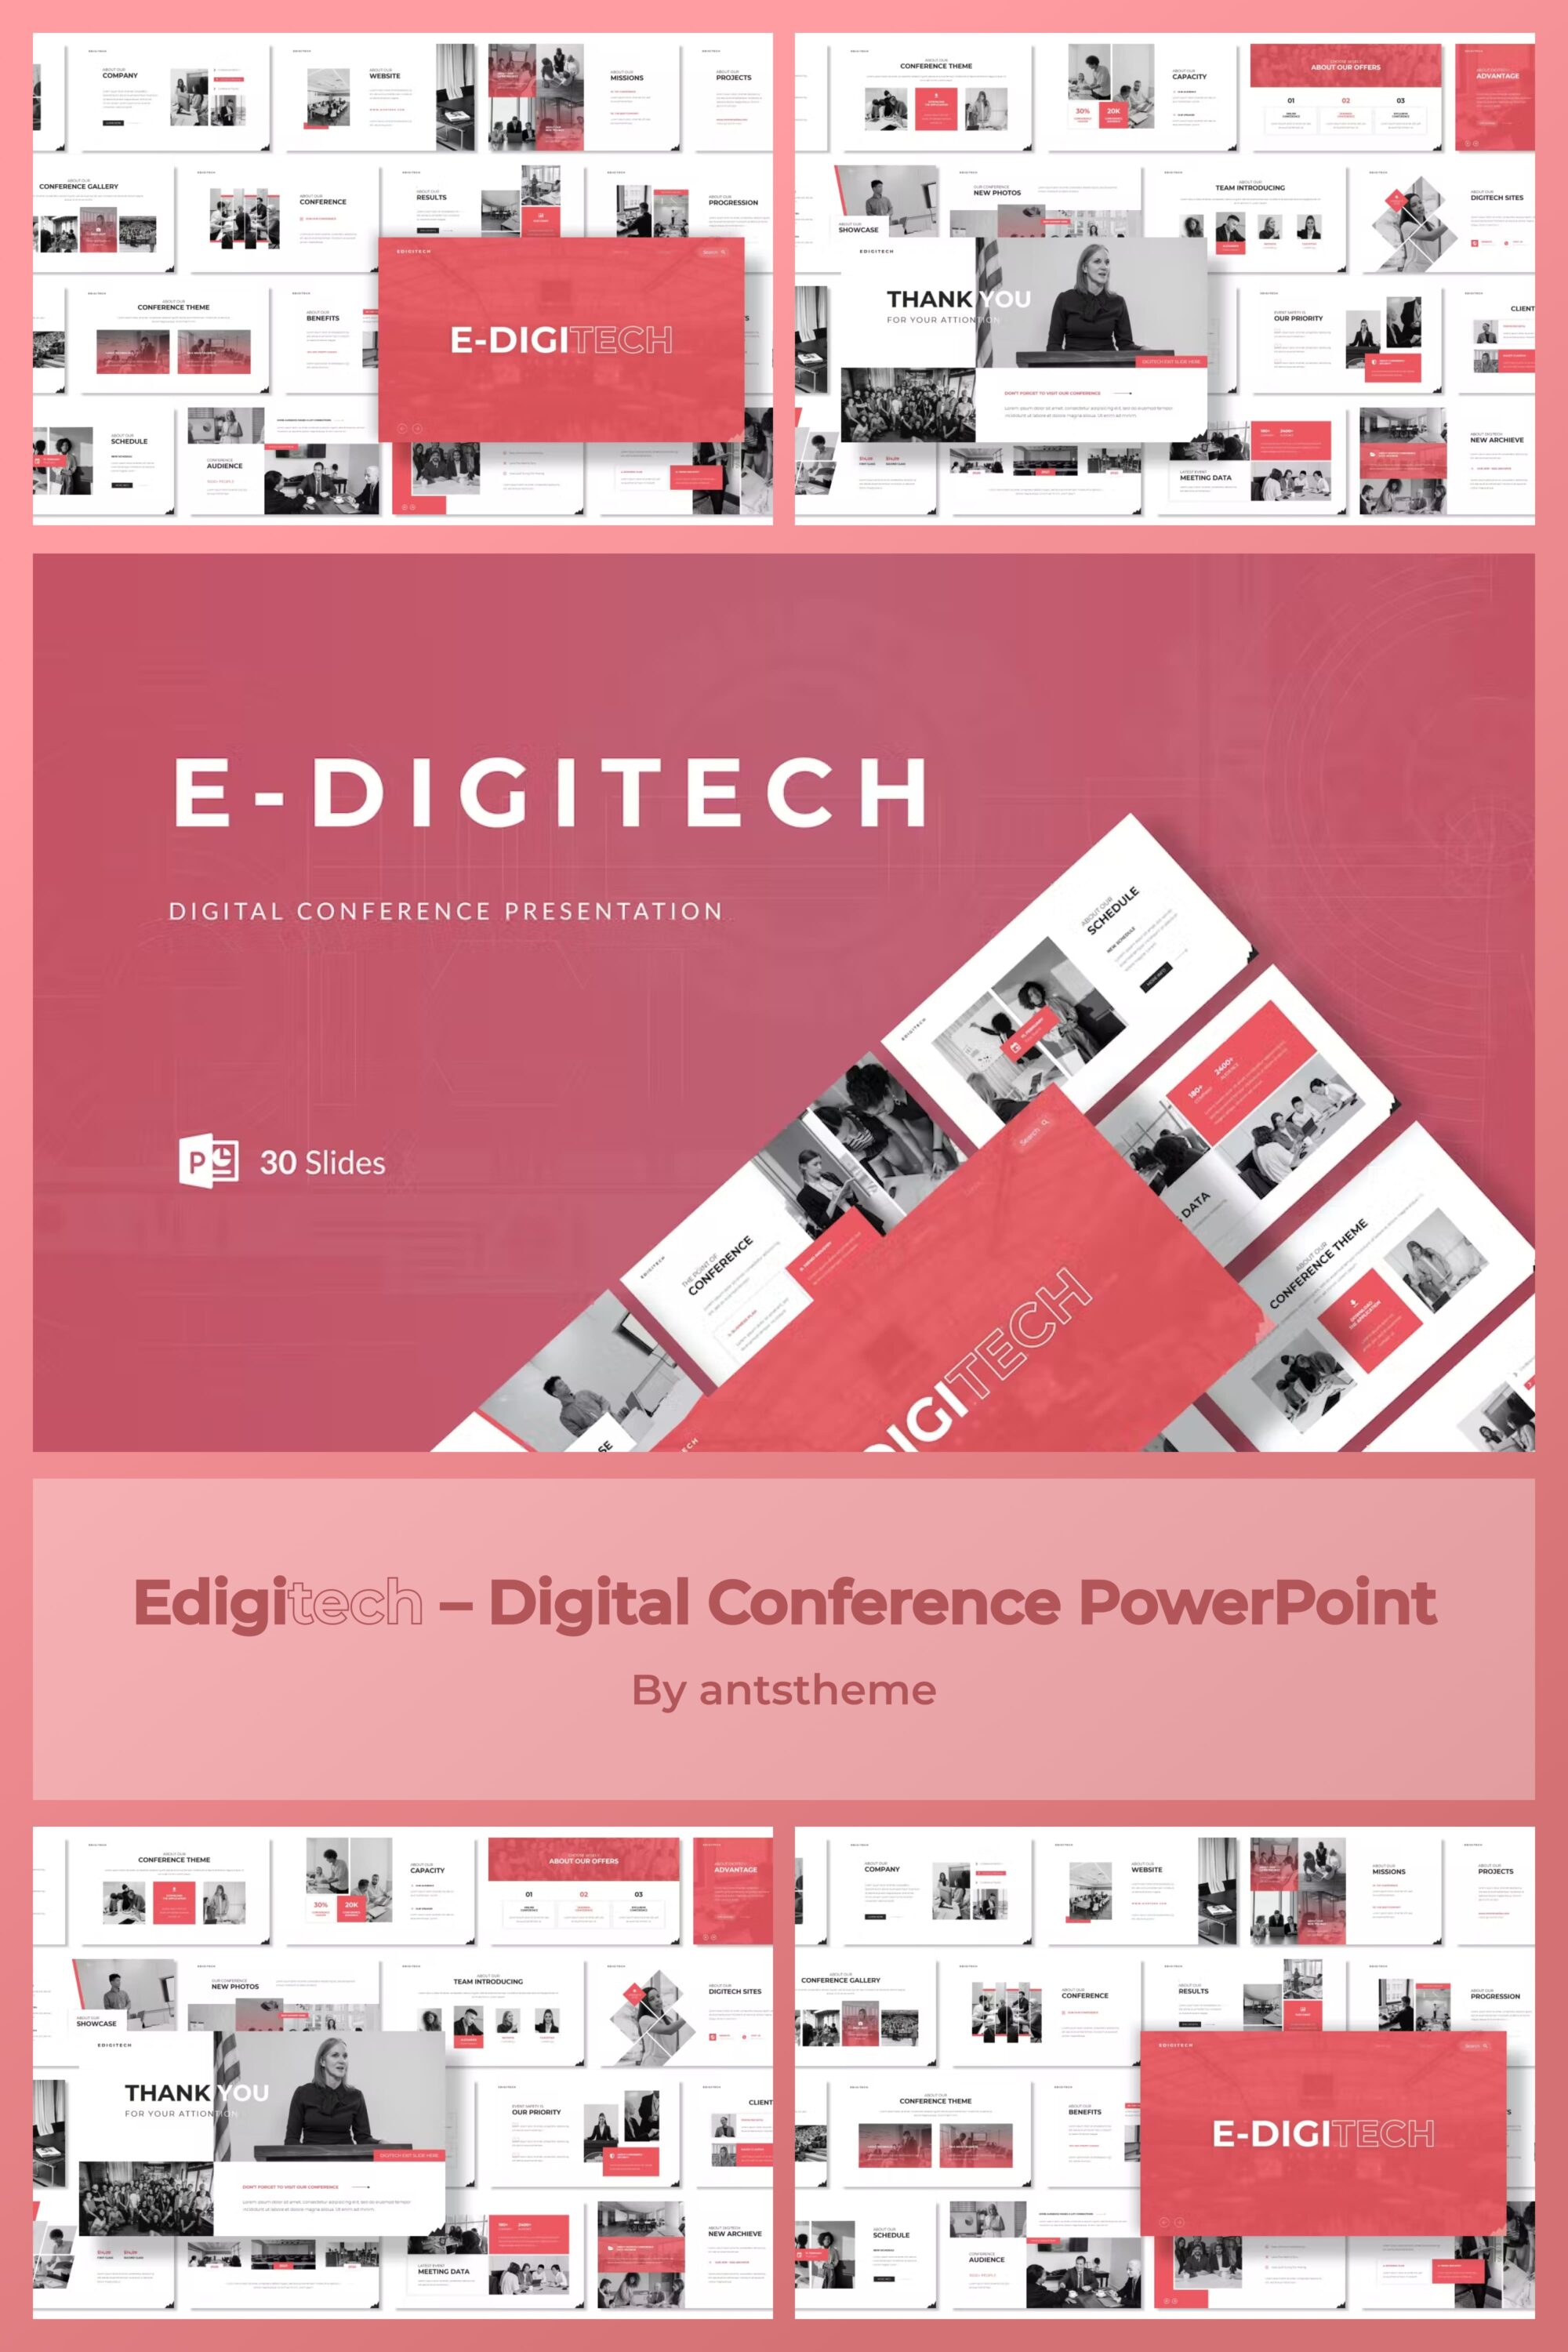 Edigitech Digital Conference PowerPoint - pinterest image preview.